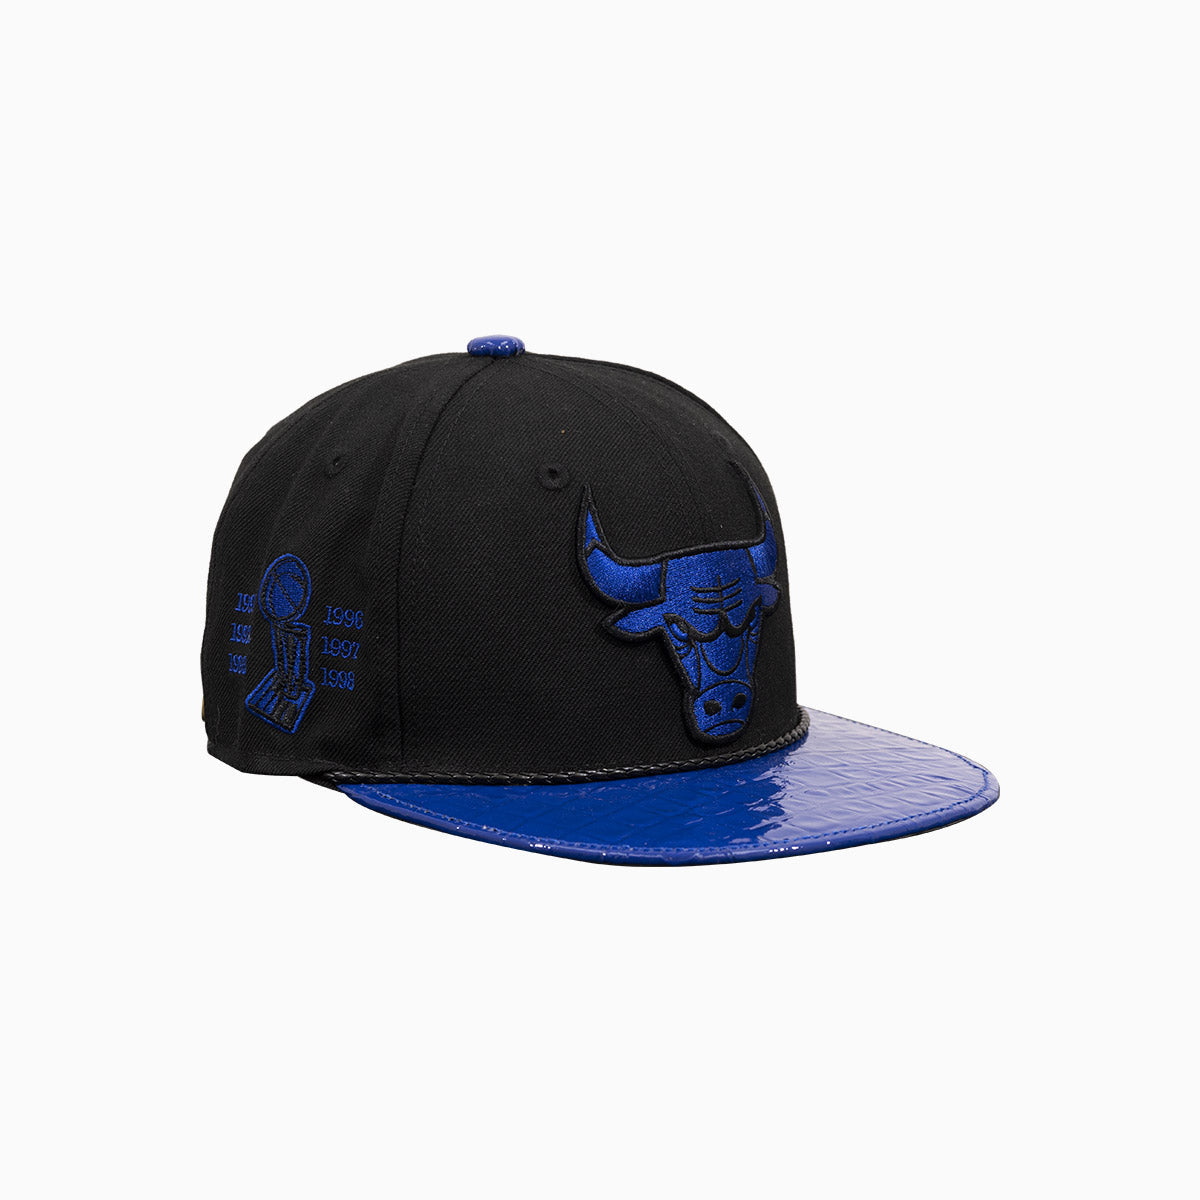 breyers-buck-50-chicago-bulls-hat-with-leather-visor-breyers-tcbh-black-blue